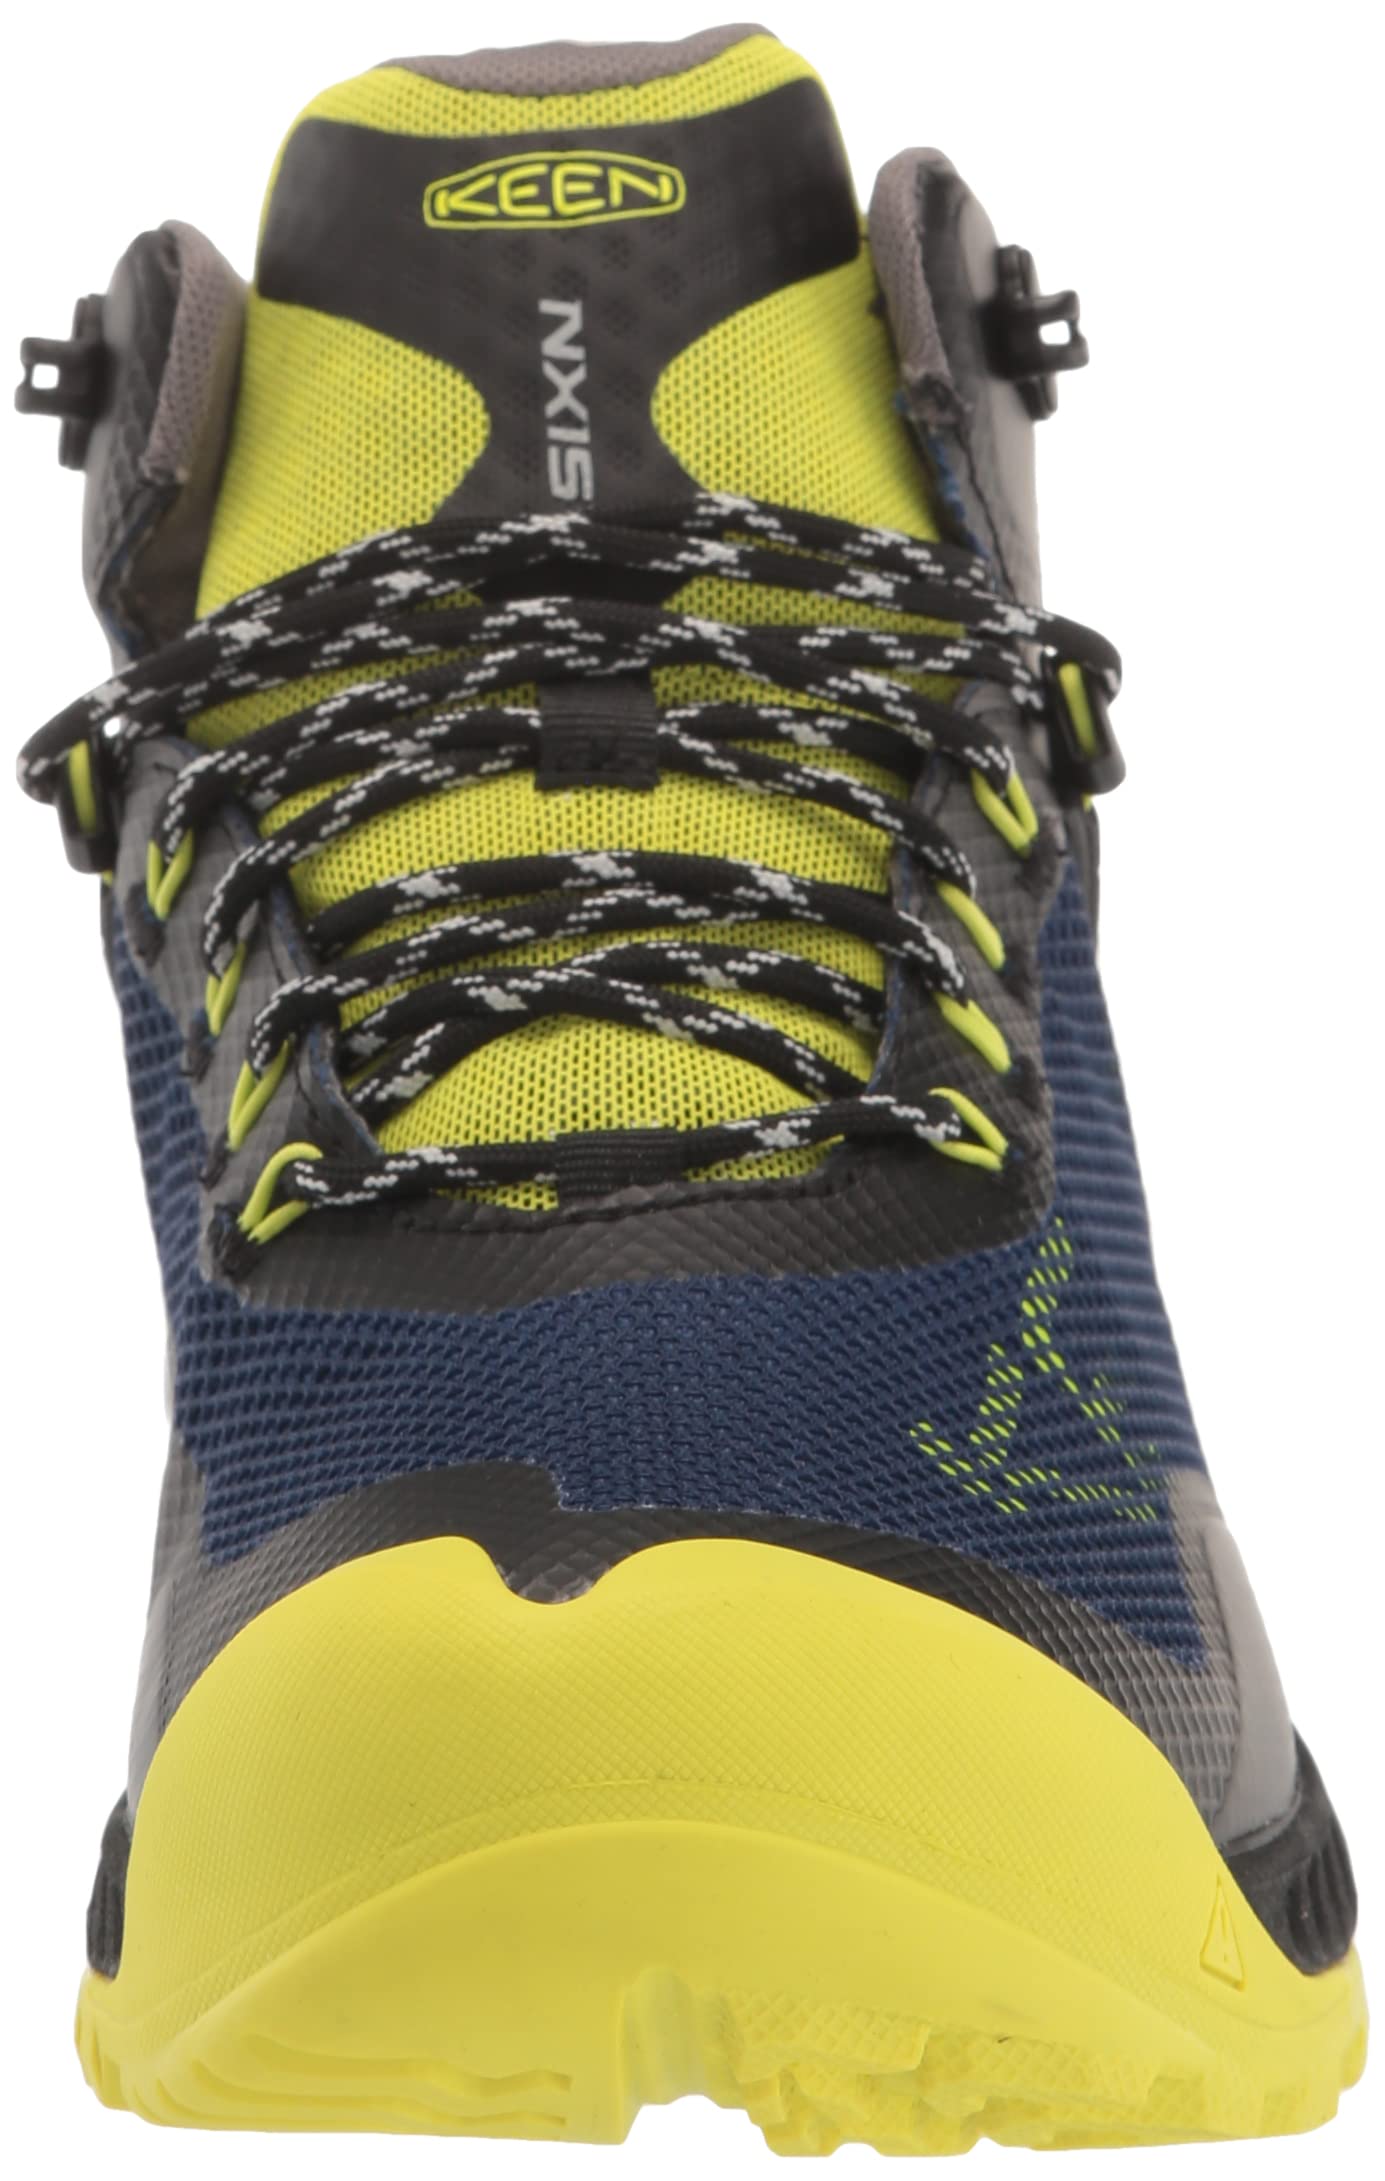 KEEN Men's Nxis Evo Mid Height Waterproof Hiking Boots